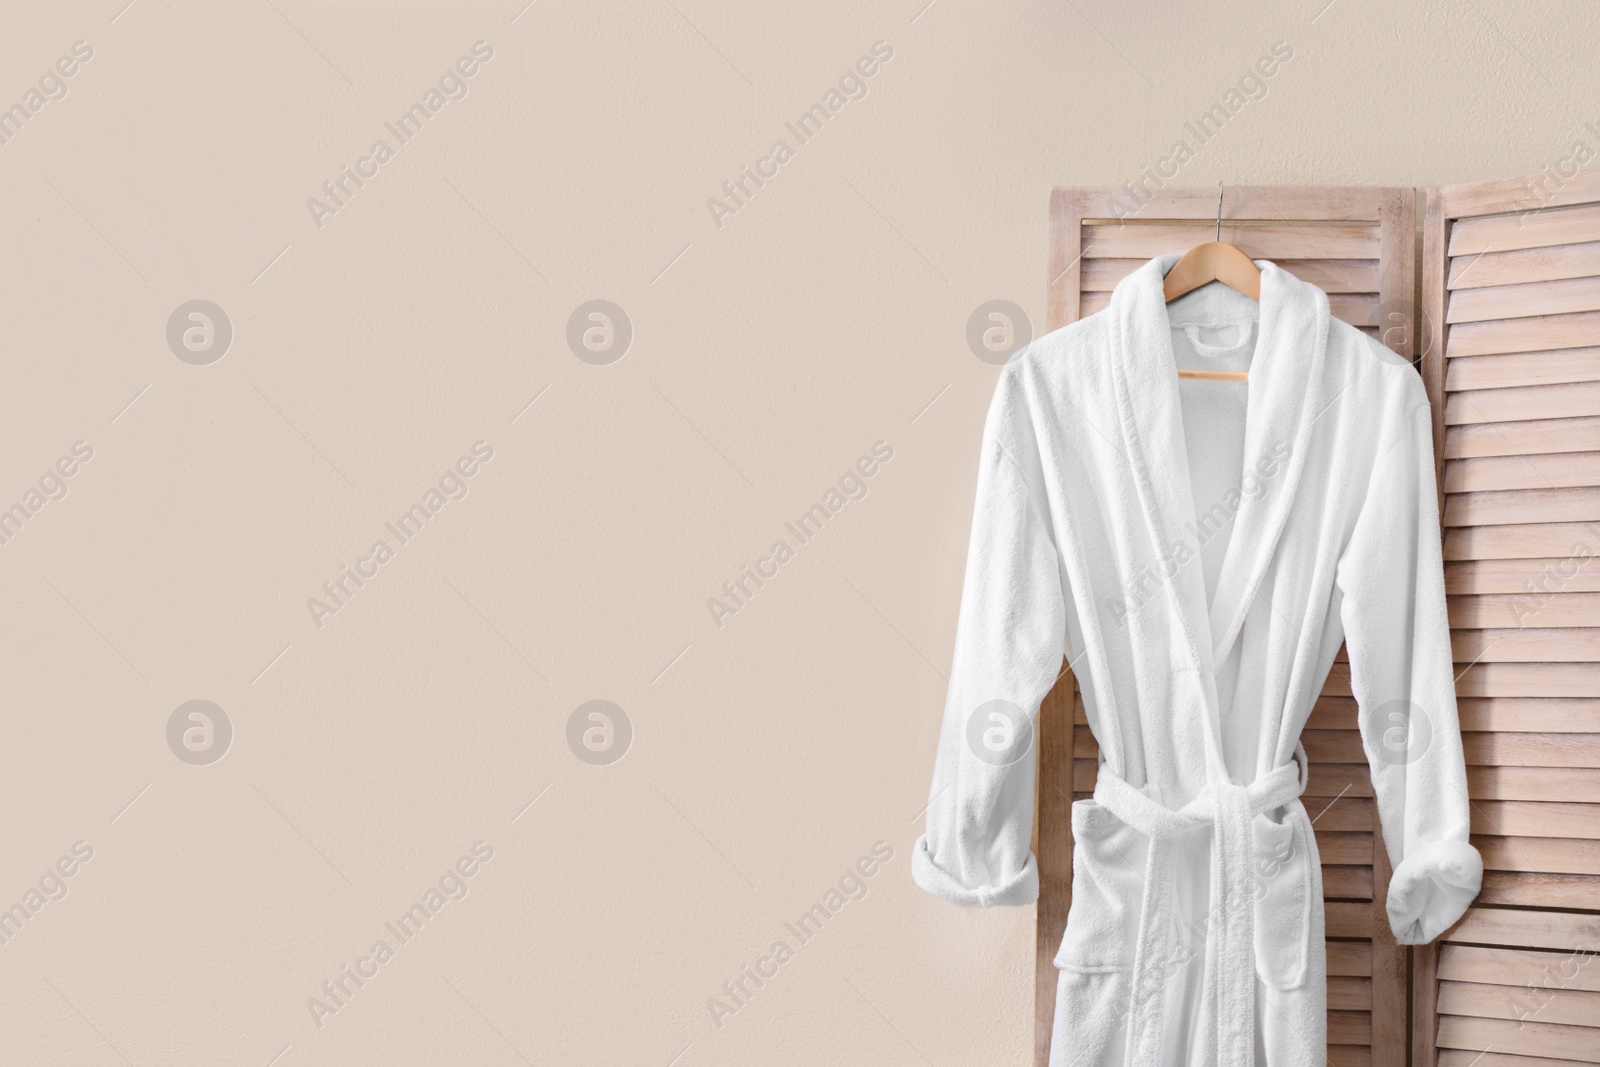 Photo of Soft comfortable bathrobe hanging on folding screen in stylish room interior